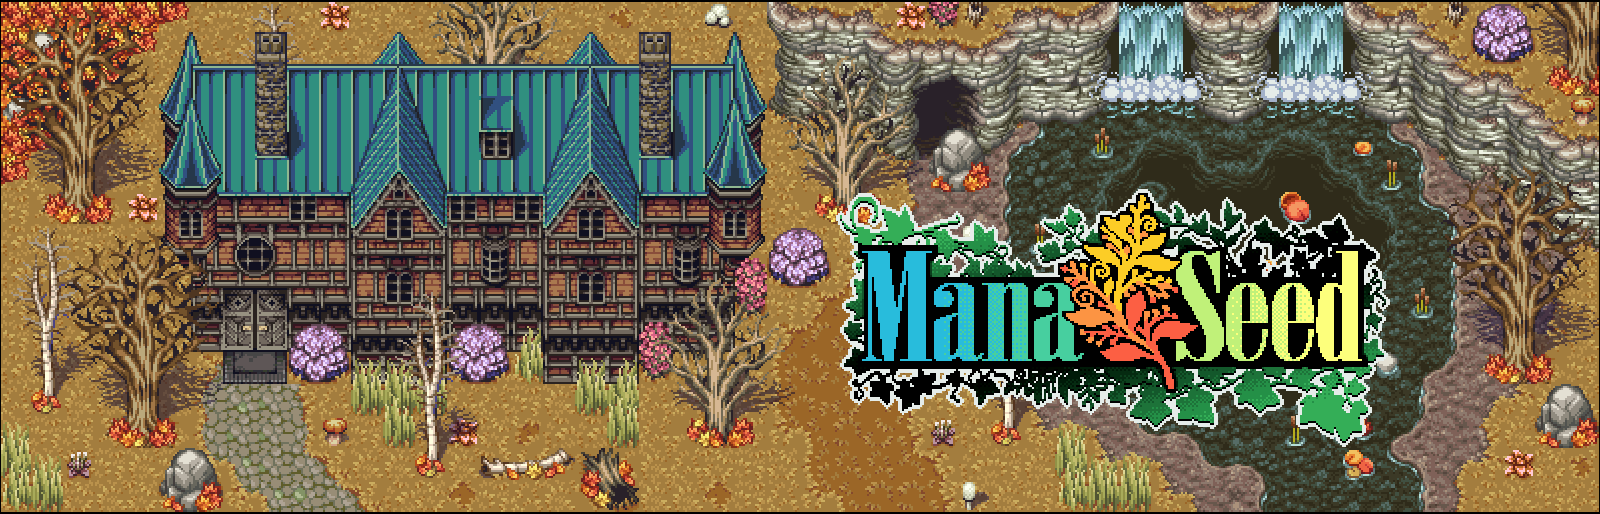 Pixel Art Tileset - Steampunk Manor